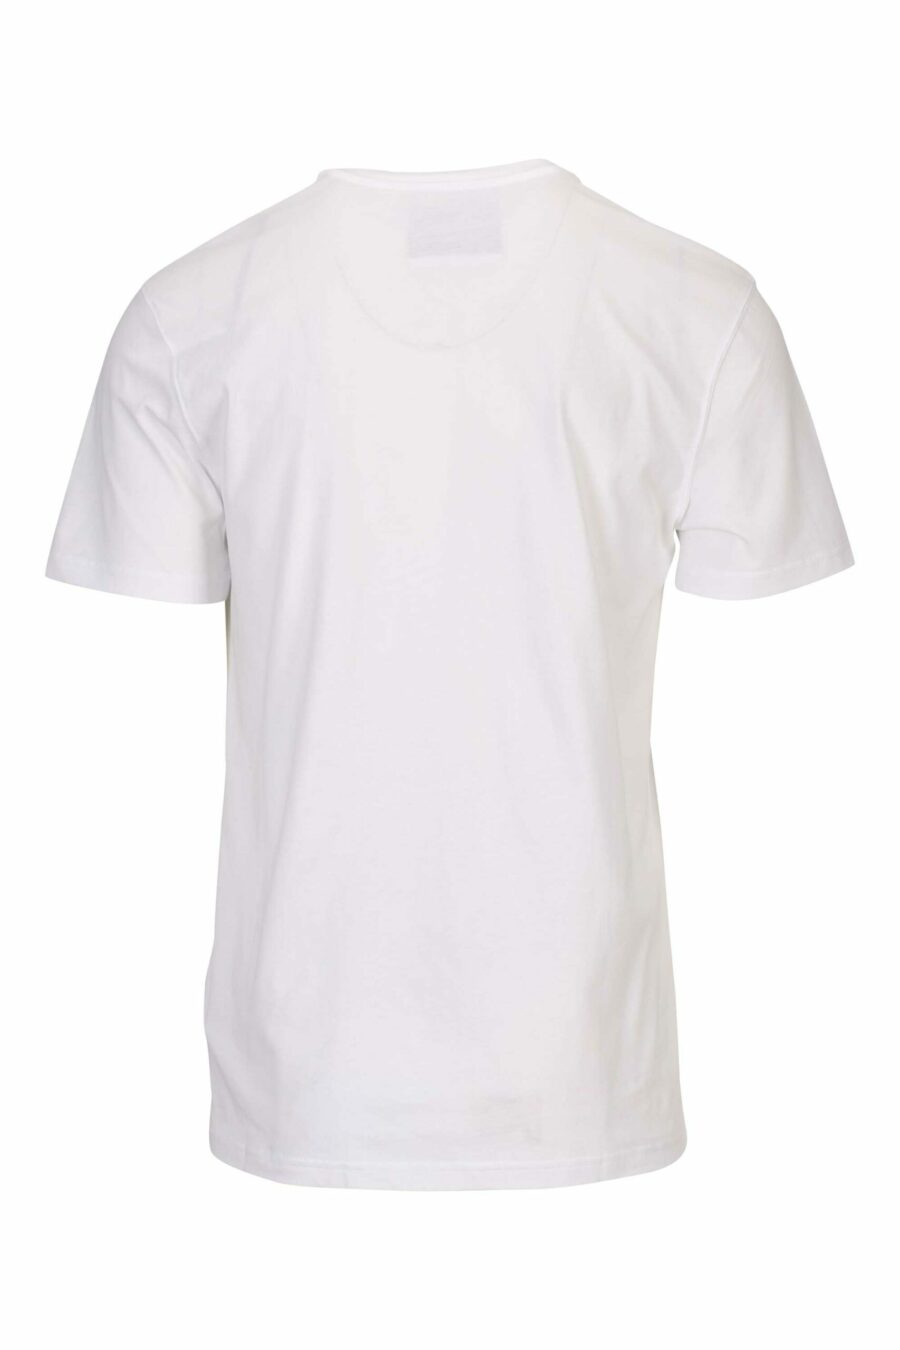 Camiseta blanca con minilogo etiqueta negro - 667113394664 1 scaled